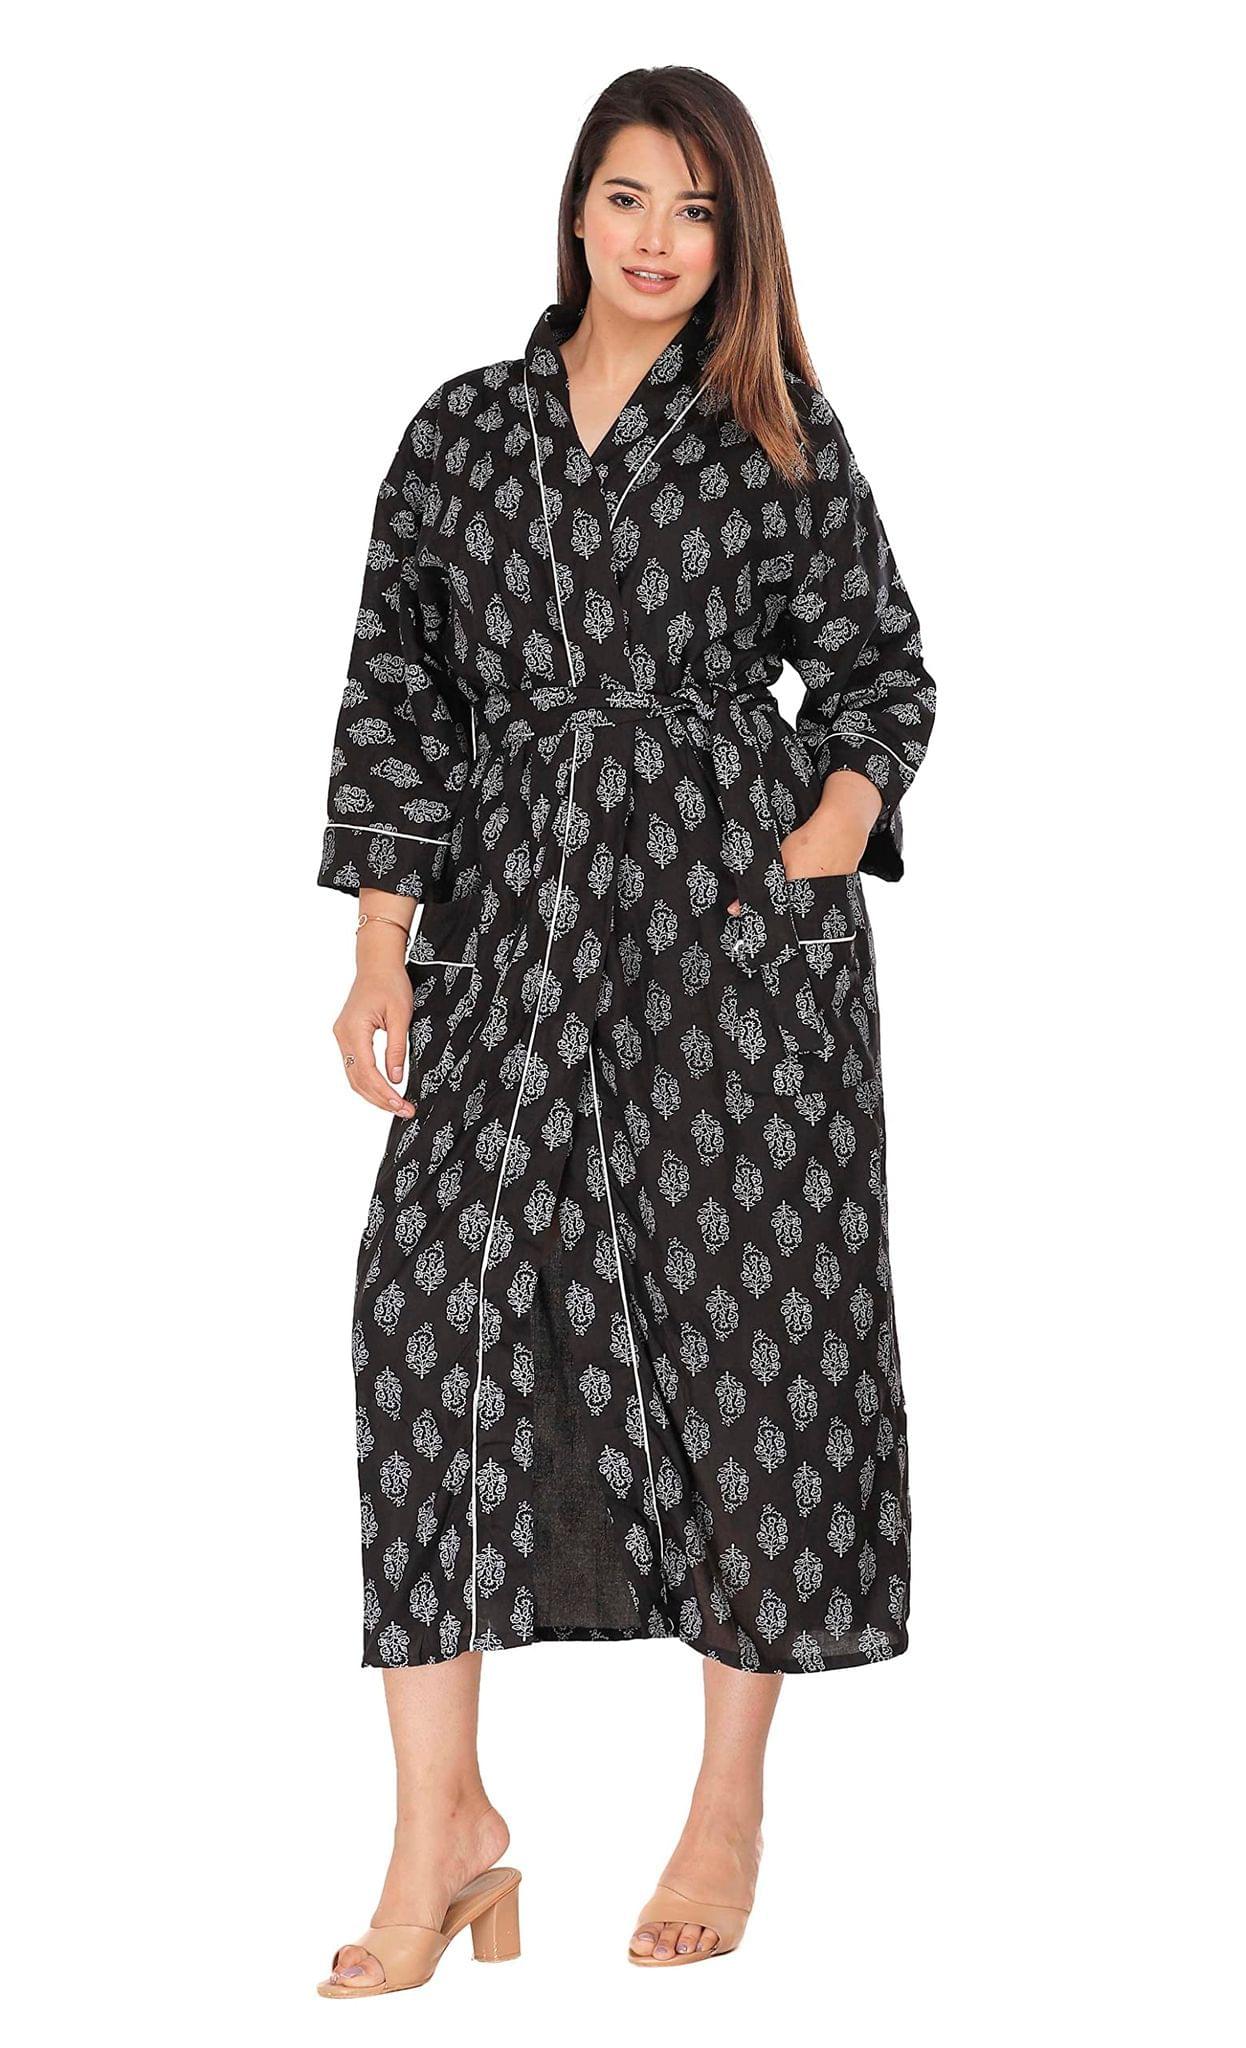 SHOOLIN Printed Kimono Robe Long Bathrobe for Women| Women Cotton Kimono Robe Long Floral| 3/4 Sleeve Kimono for Women Black